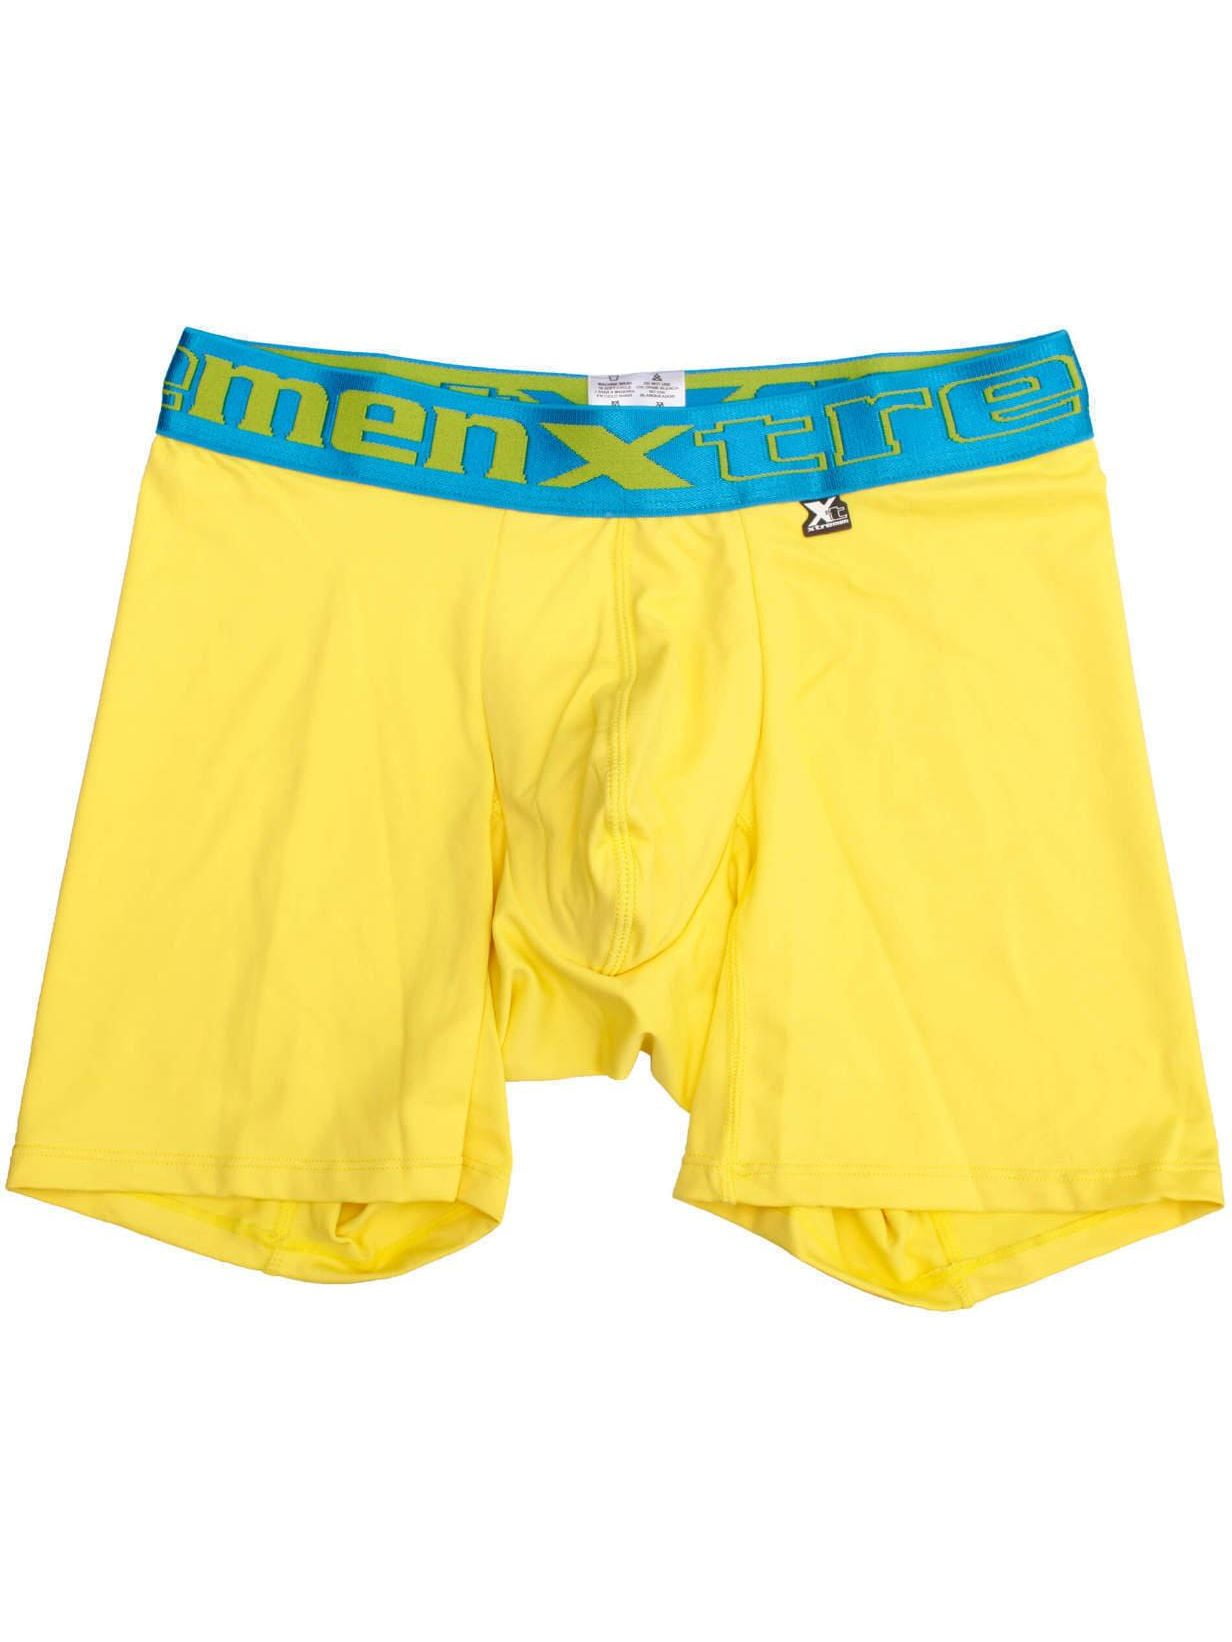 Xtremen - Xtremen 51326 Bold Long Boxer - Walmart.com - Walmart.com